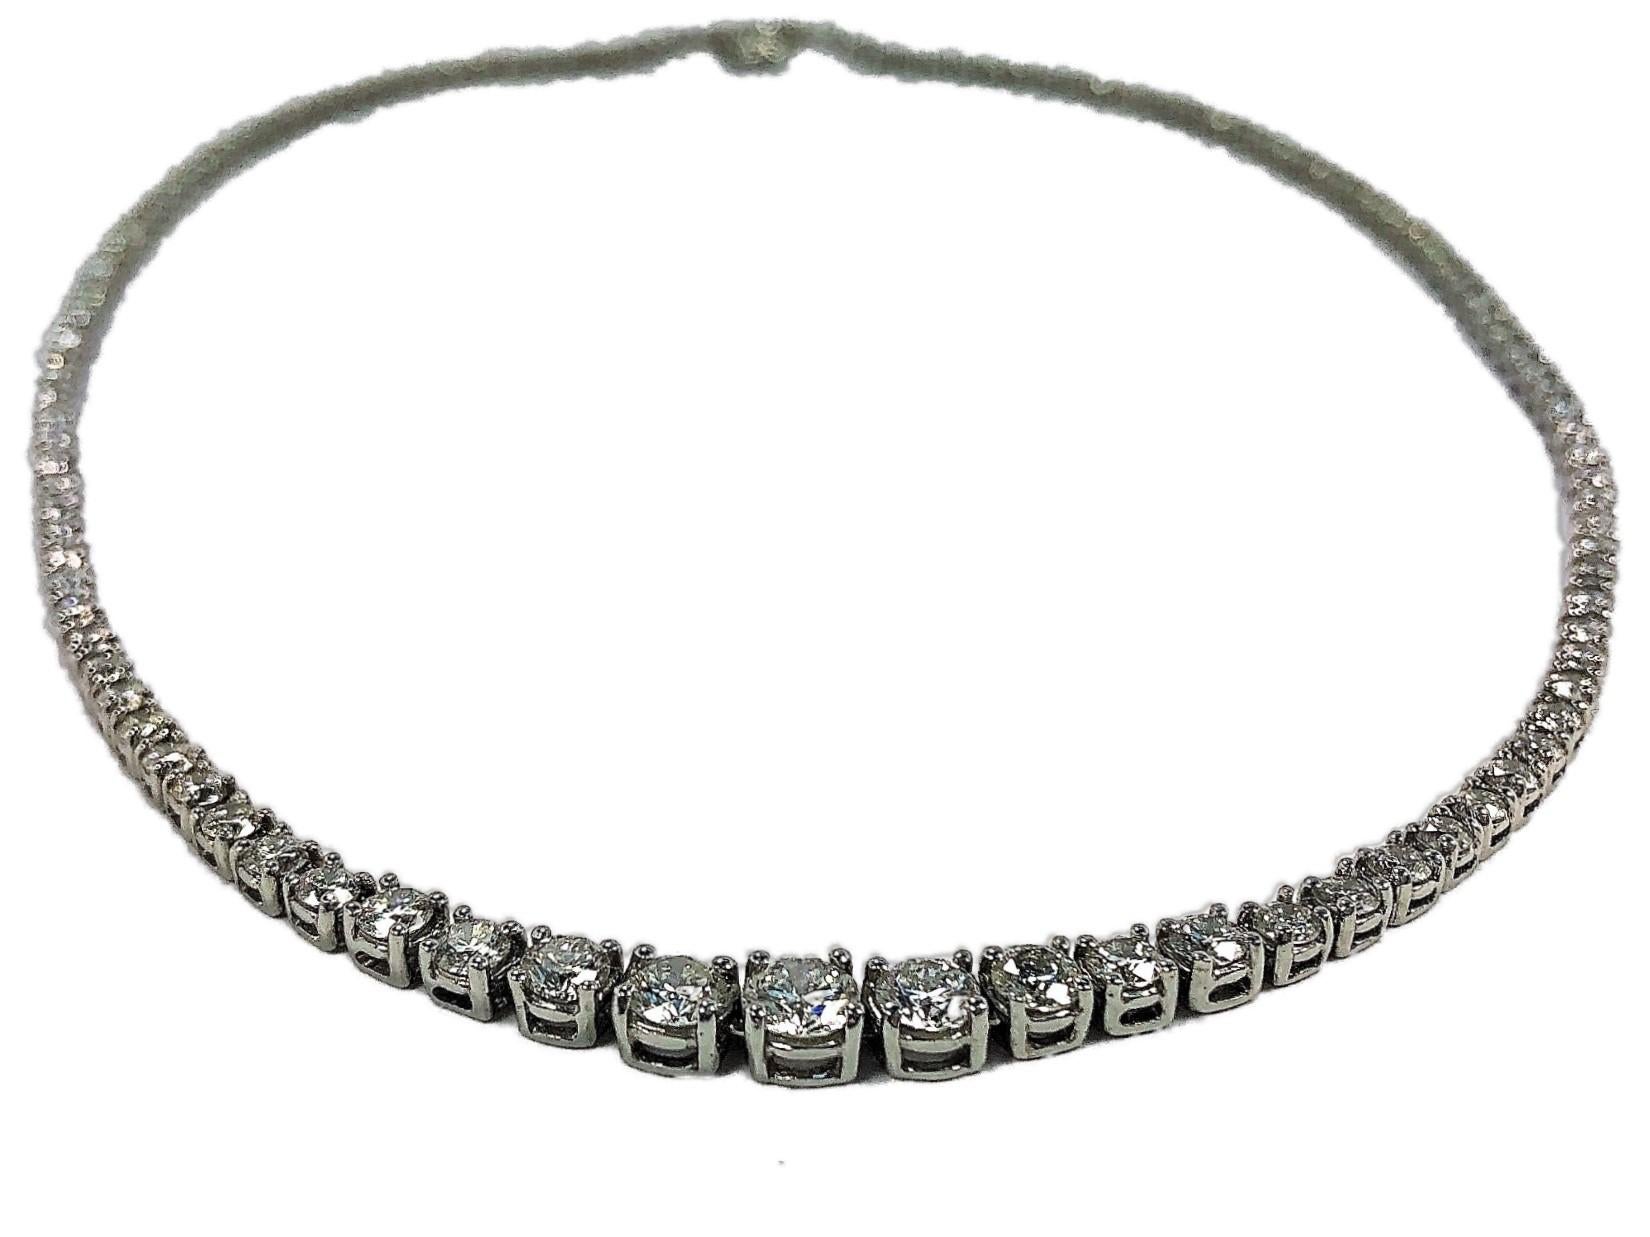 Brilliant Cut Graduated Diamond Riviera Necklace Set in Platinum 9.78 Carat Total Weight